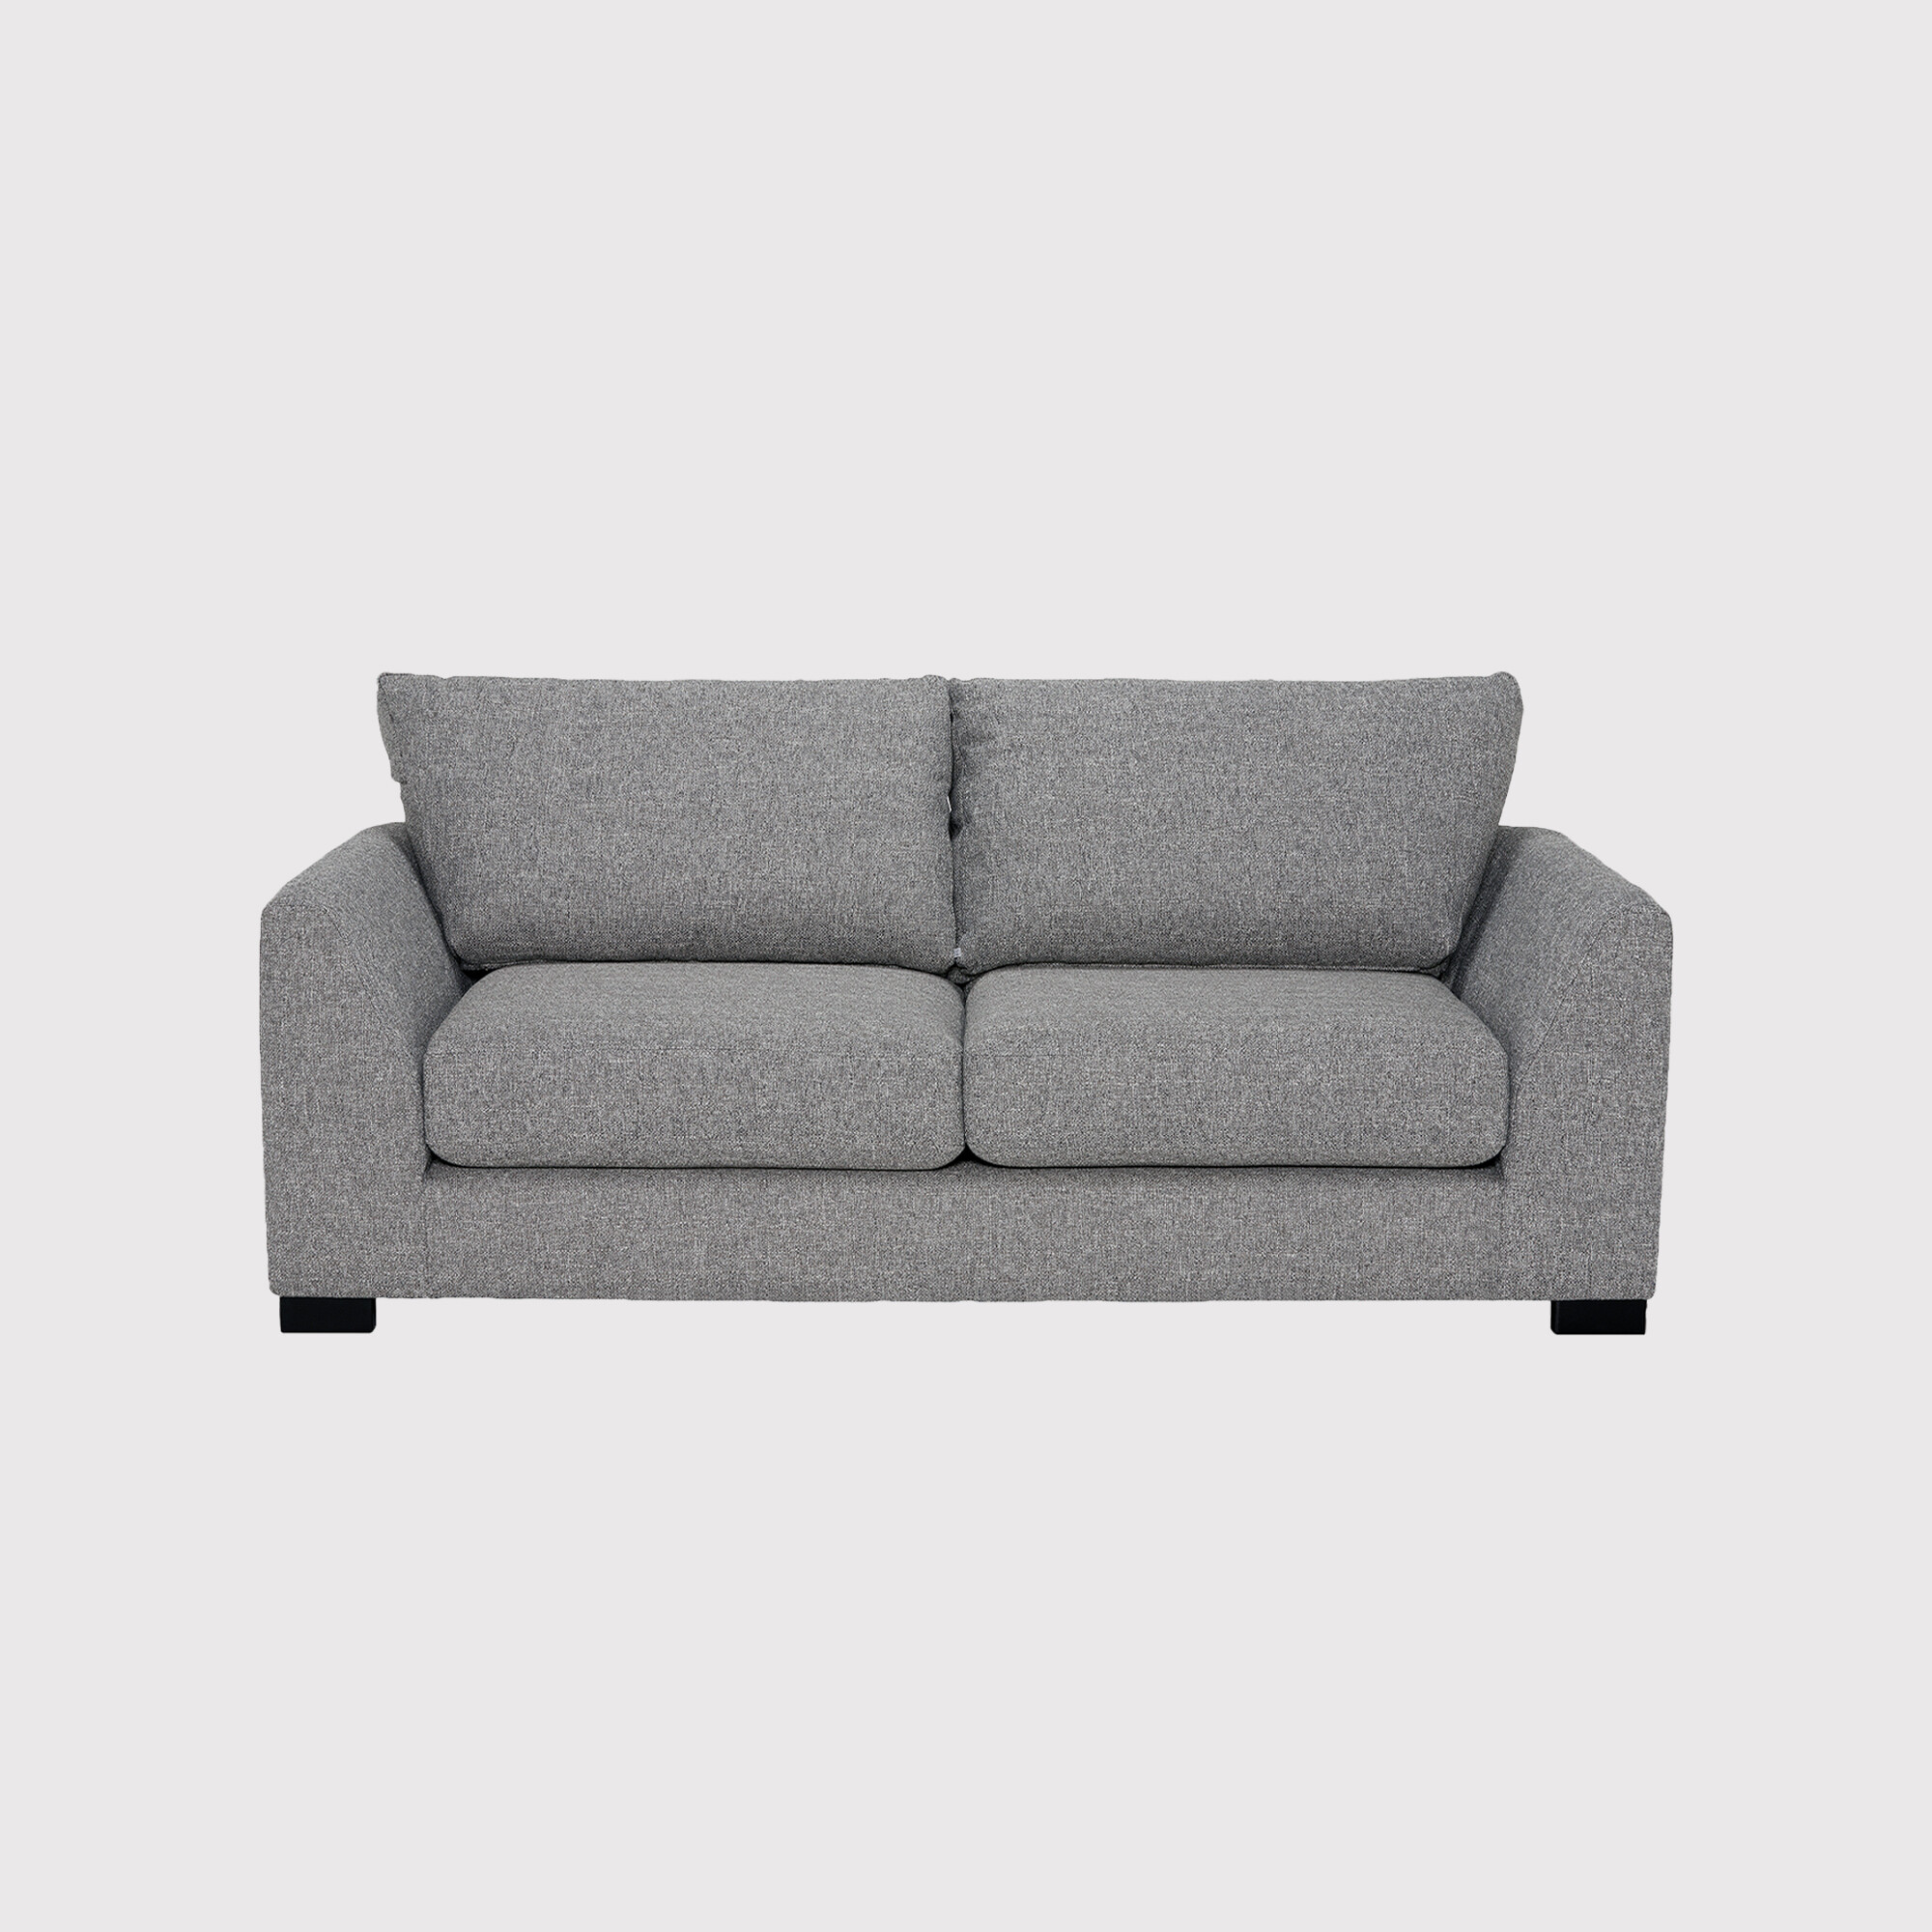 Melby 3 Seater Sofa, Grey Fabric | Barker & Stonehouse